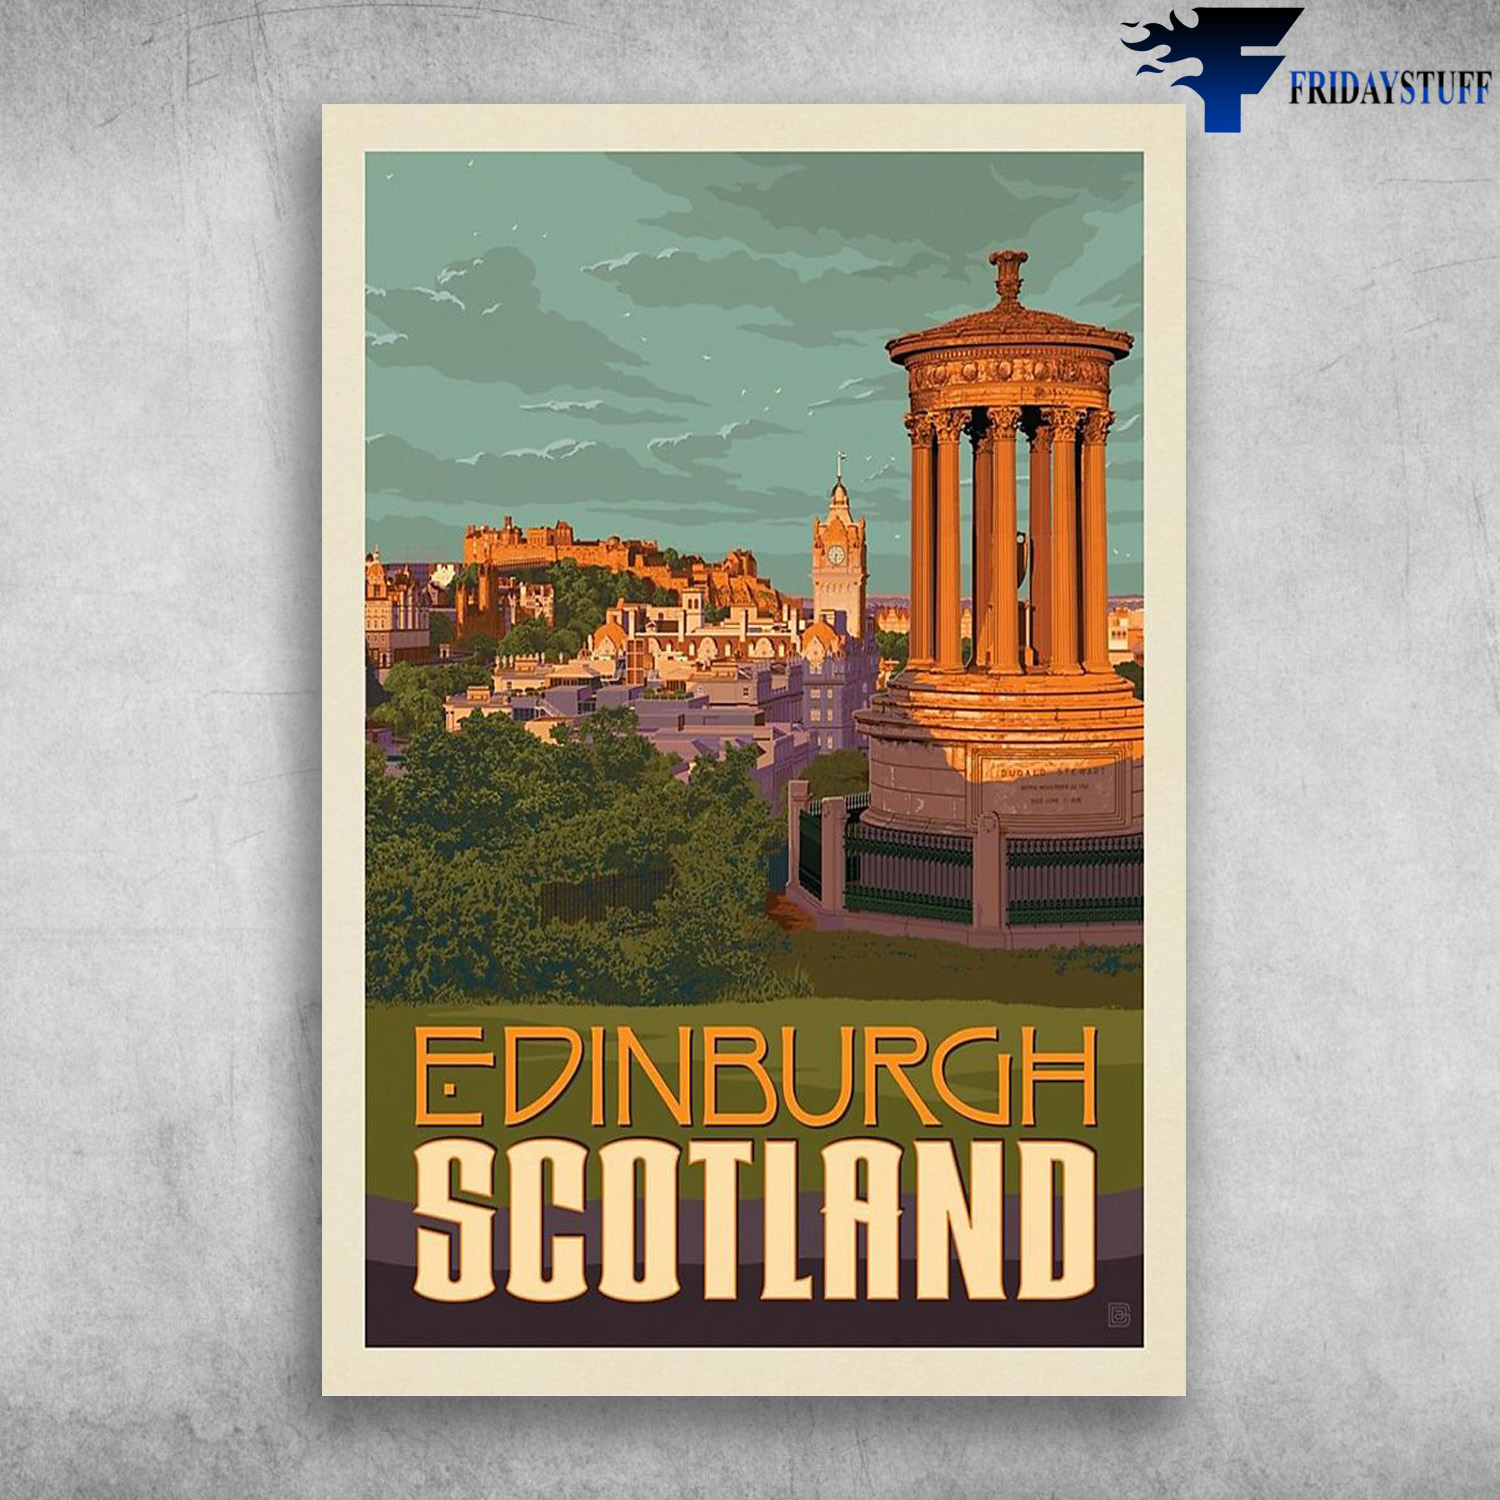 EDINBURGH TRAVEL VINTAGE REPRINT - Edinburgh Scotland